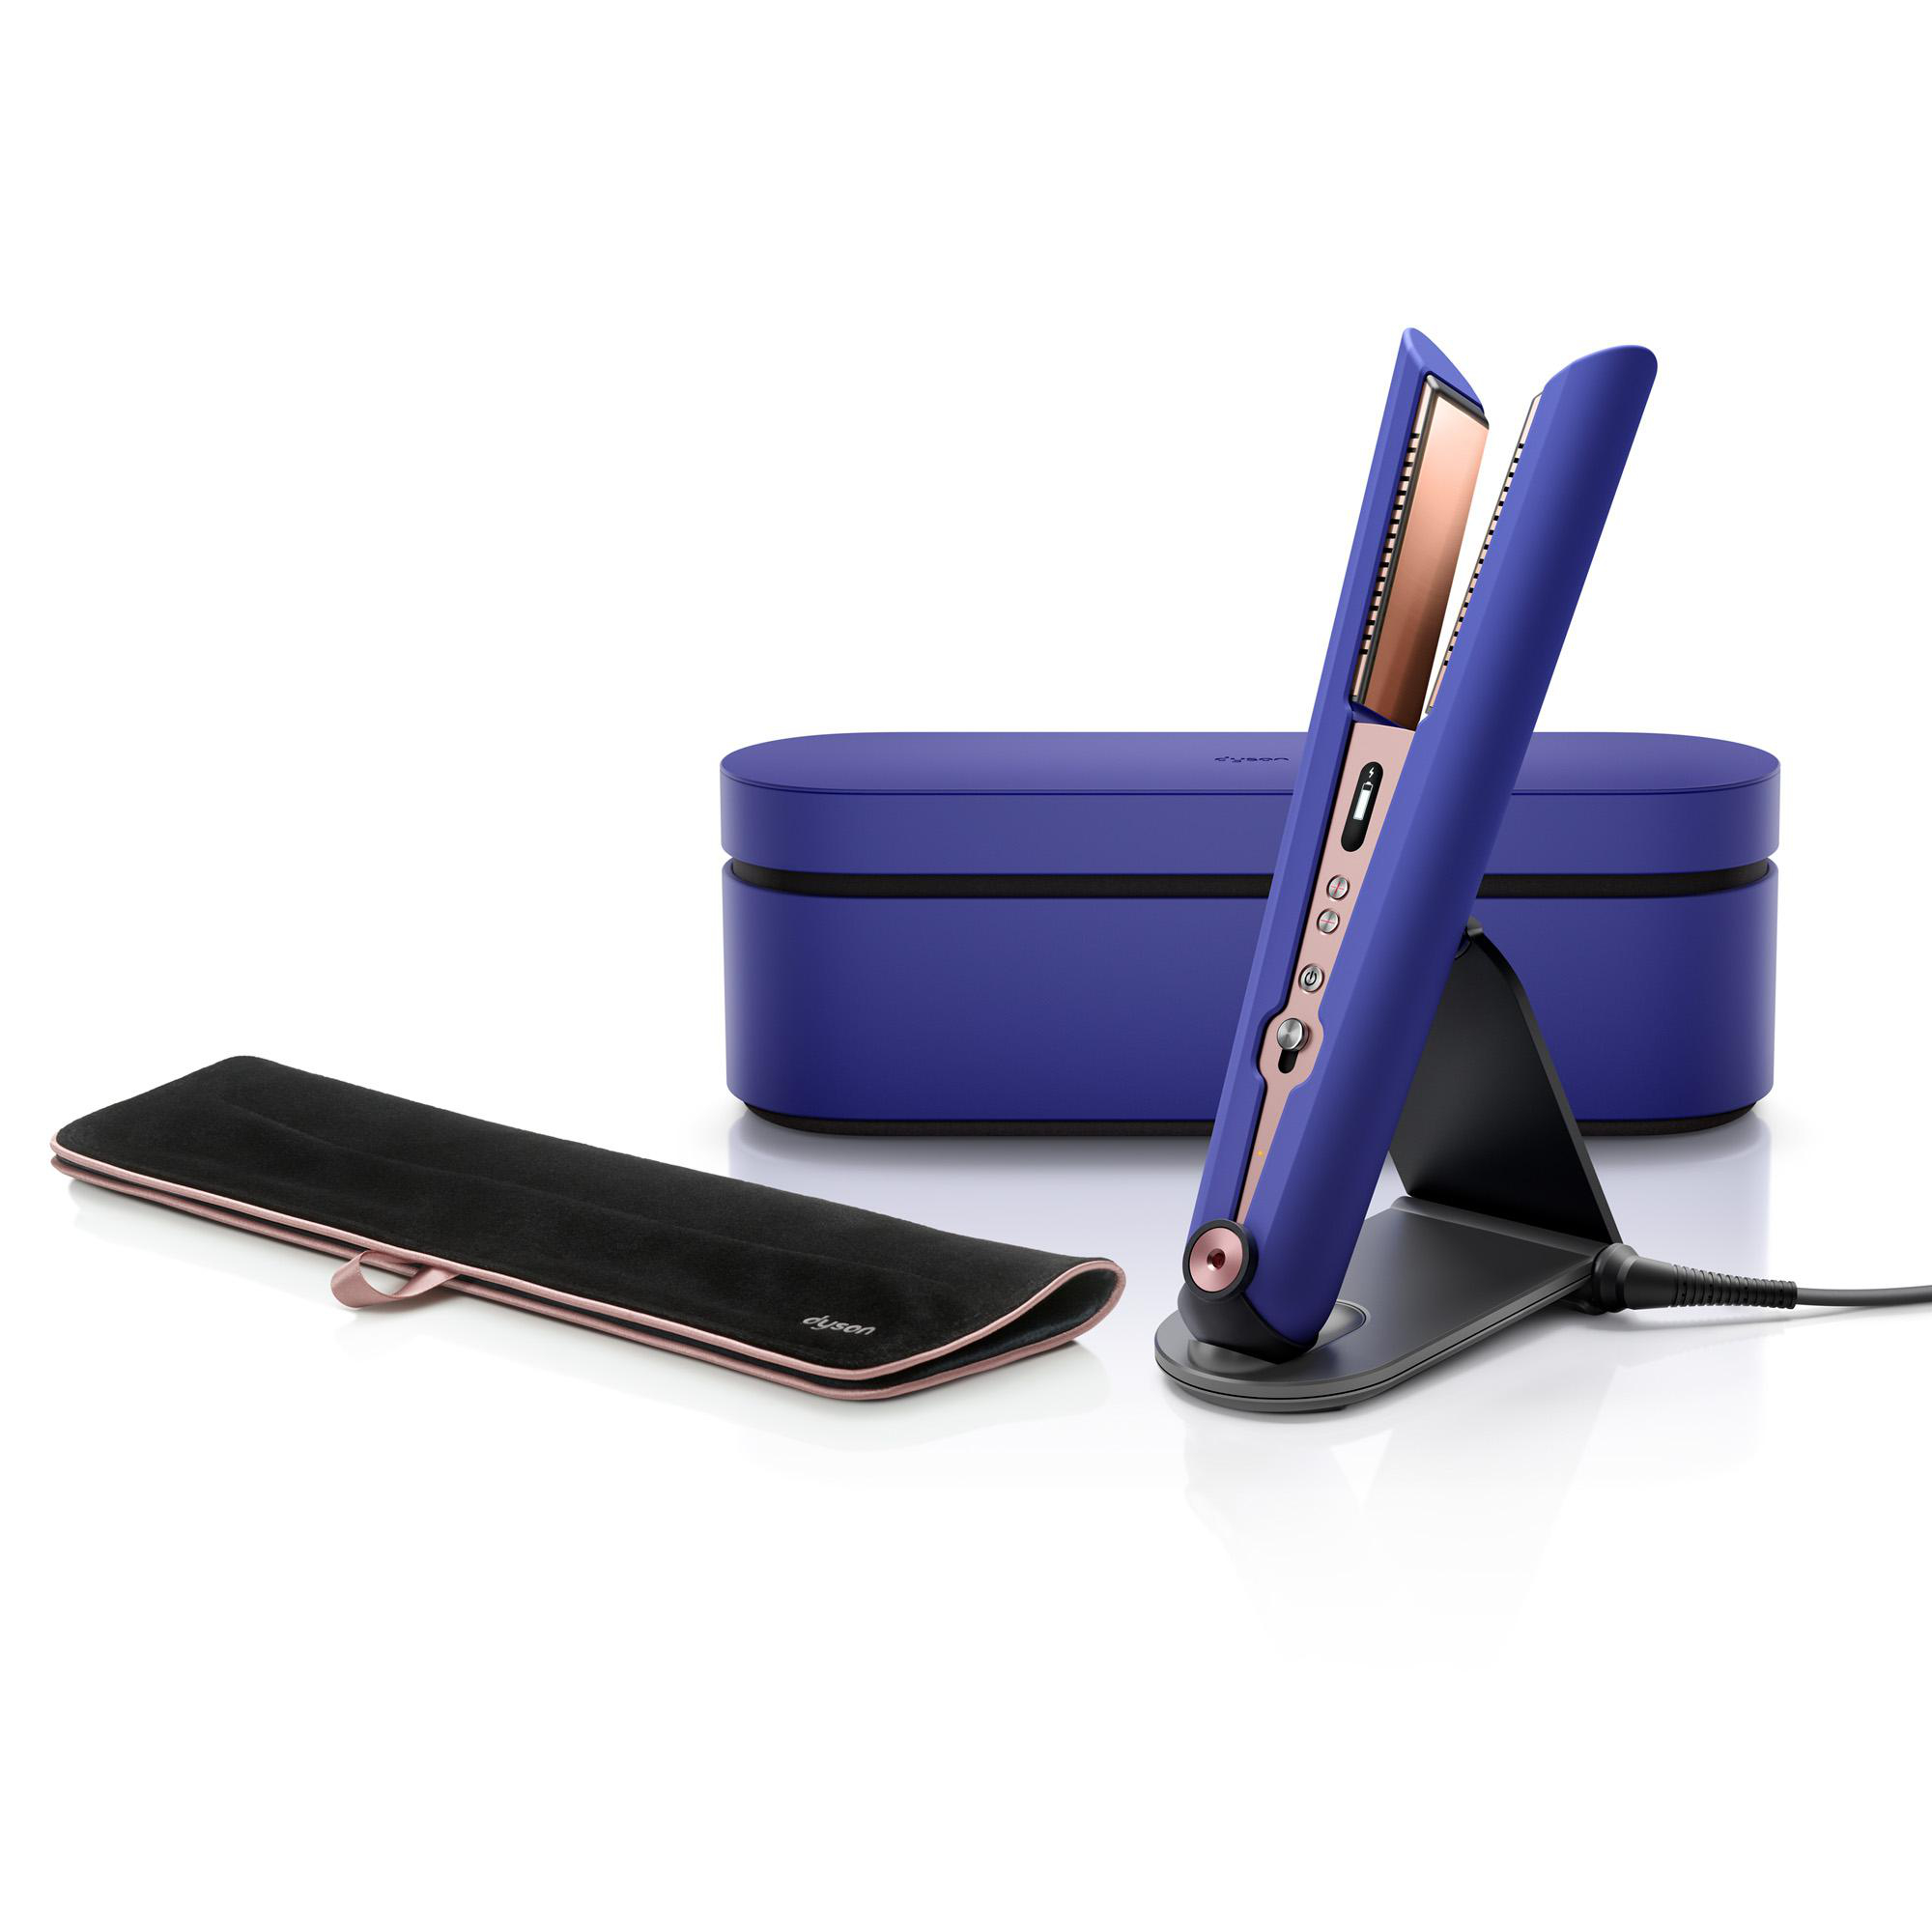 Haarglätter, Kupfer-Mangan Beschichtung: Violettblau/Rosé - Edition Corrale™ DYSON Gifting